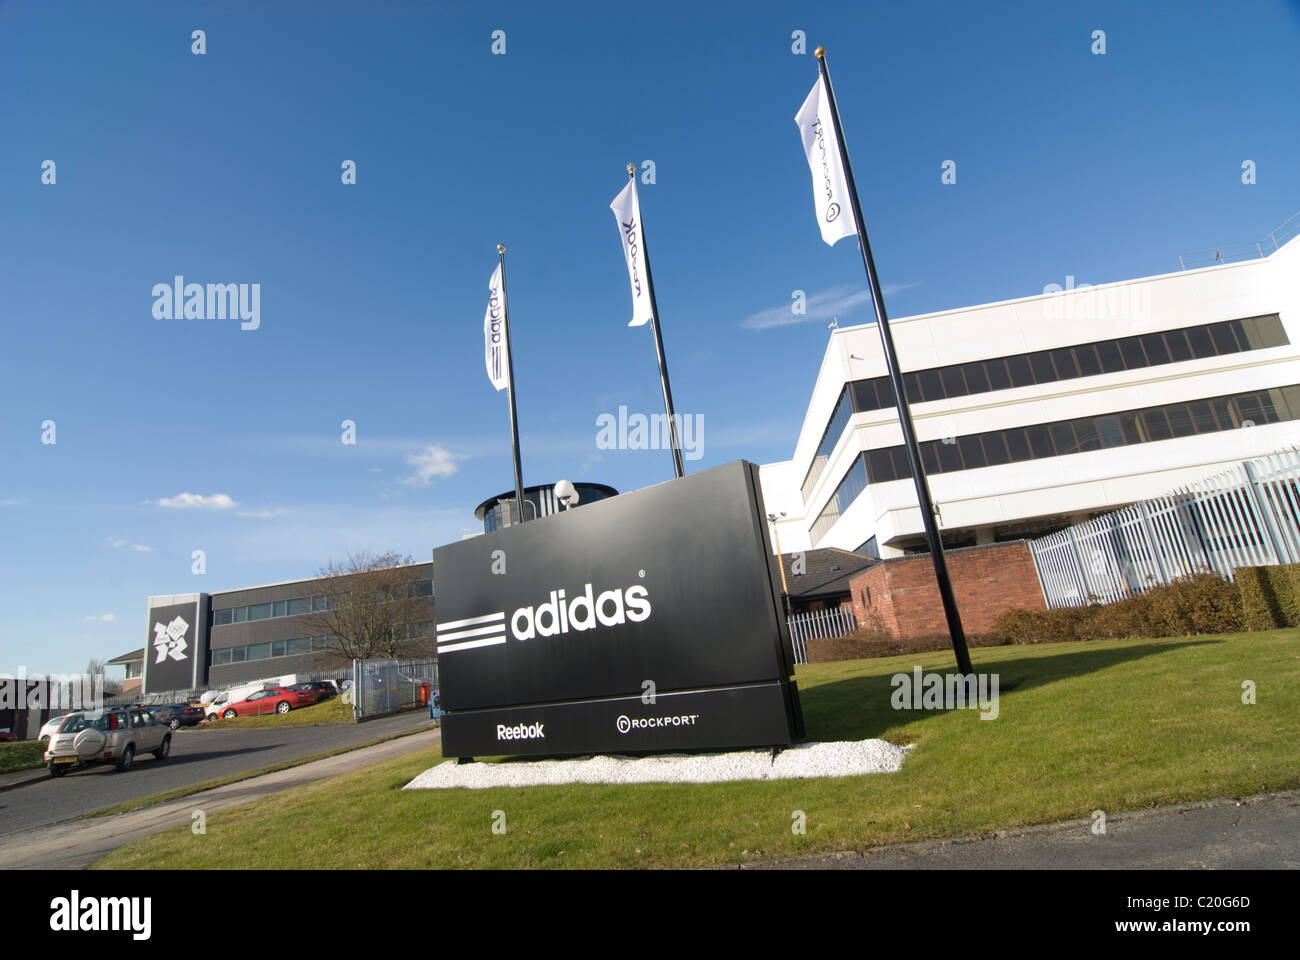 Adidas sede empresarial Stockport Manchester Fotografía stock - Alamy